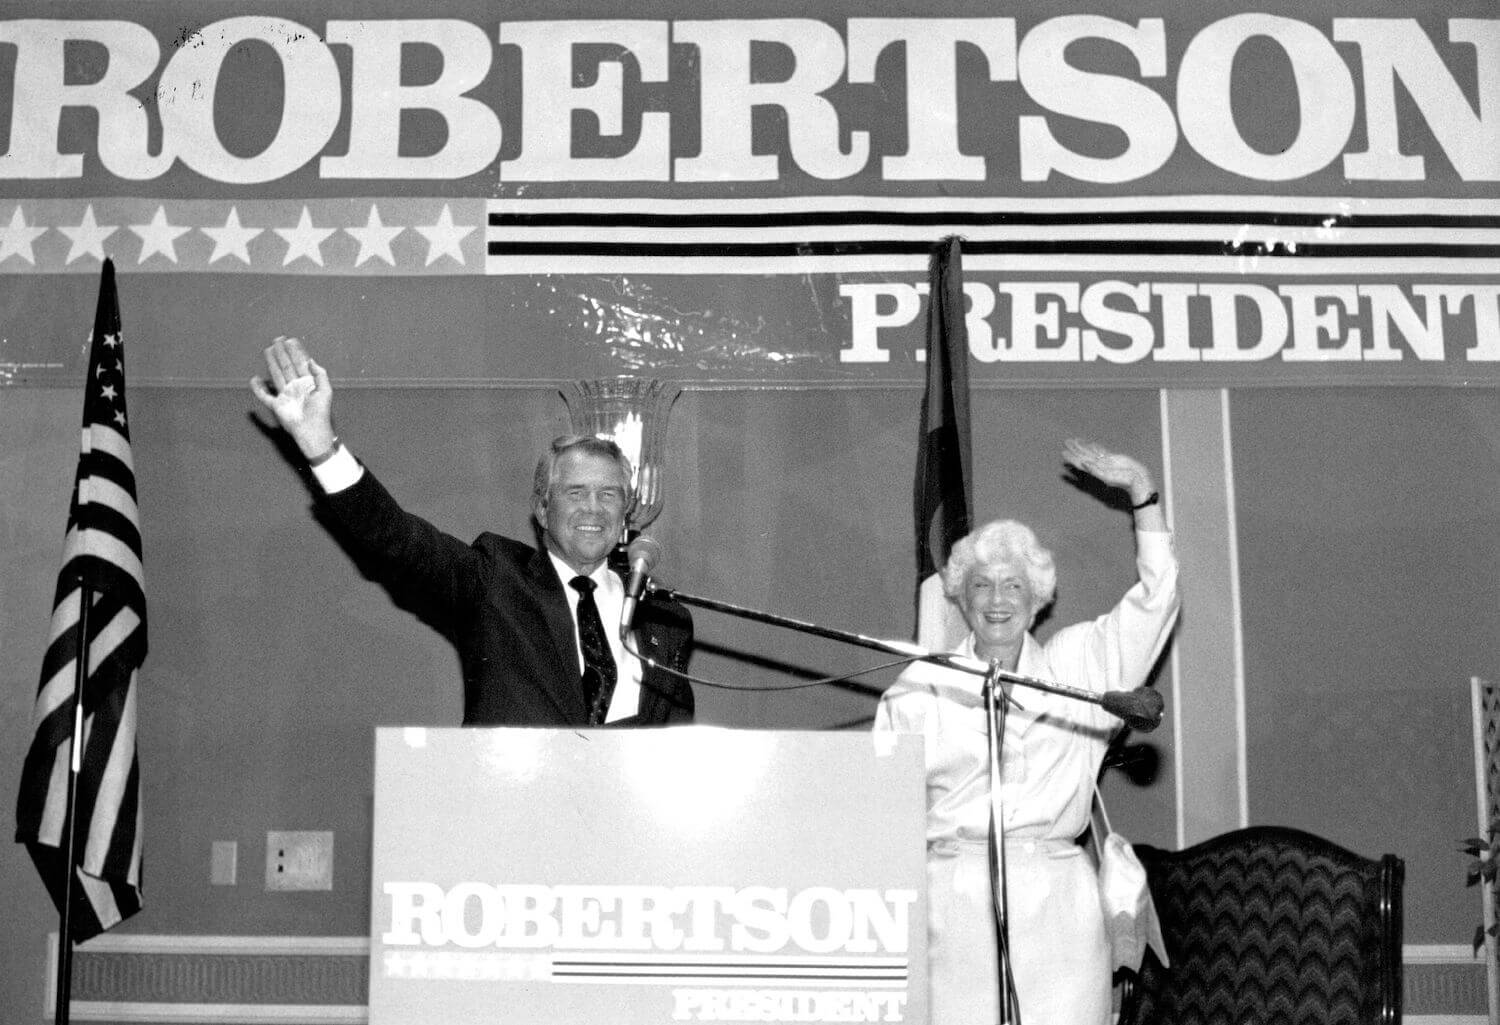 Kim była żona Pata Robertsona, Dede Robertson? Ile mieli dzieci?